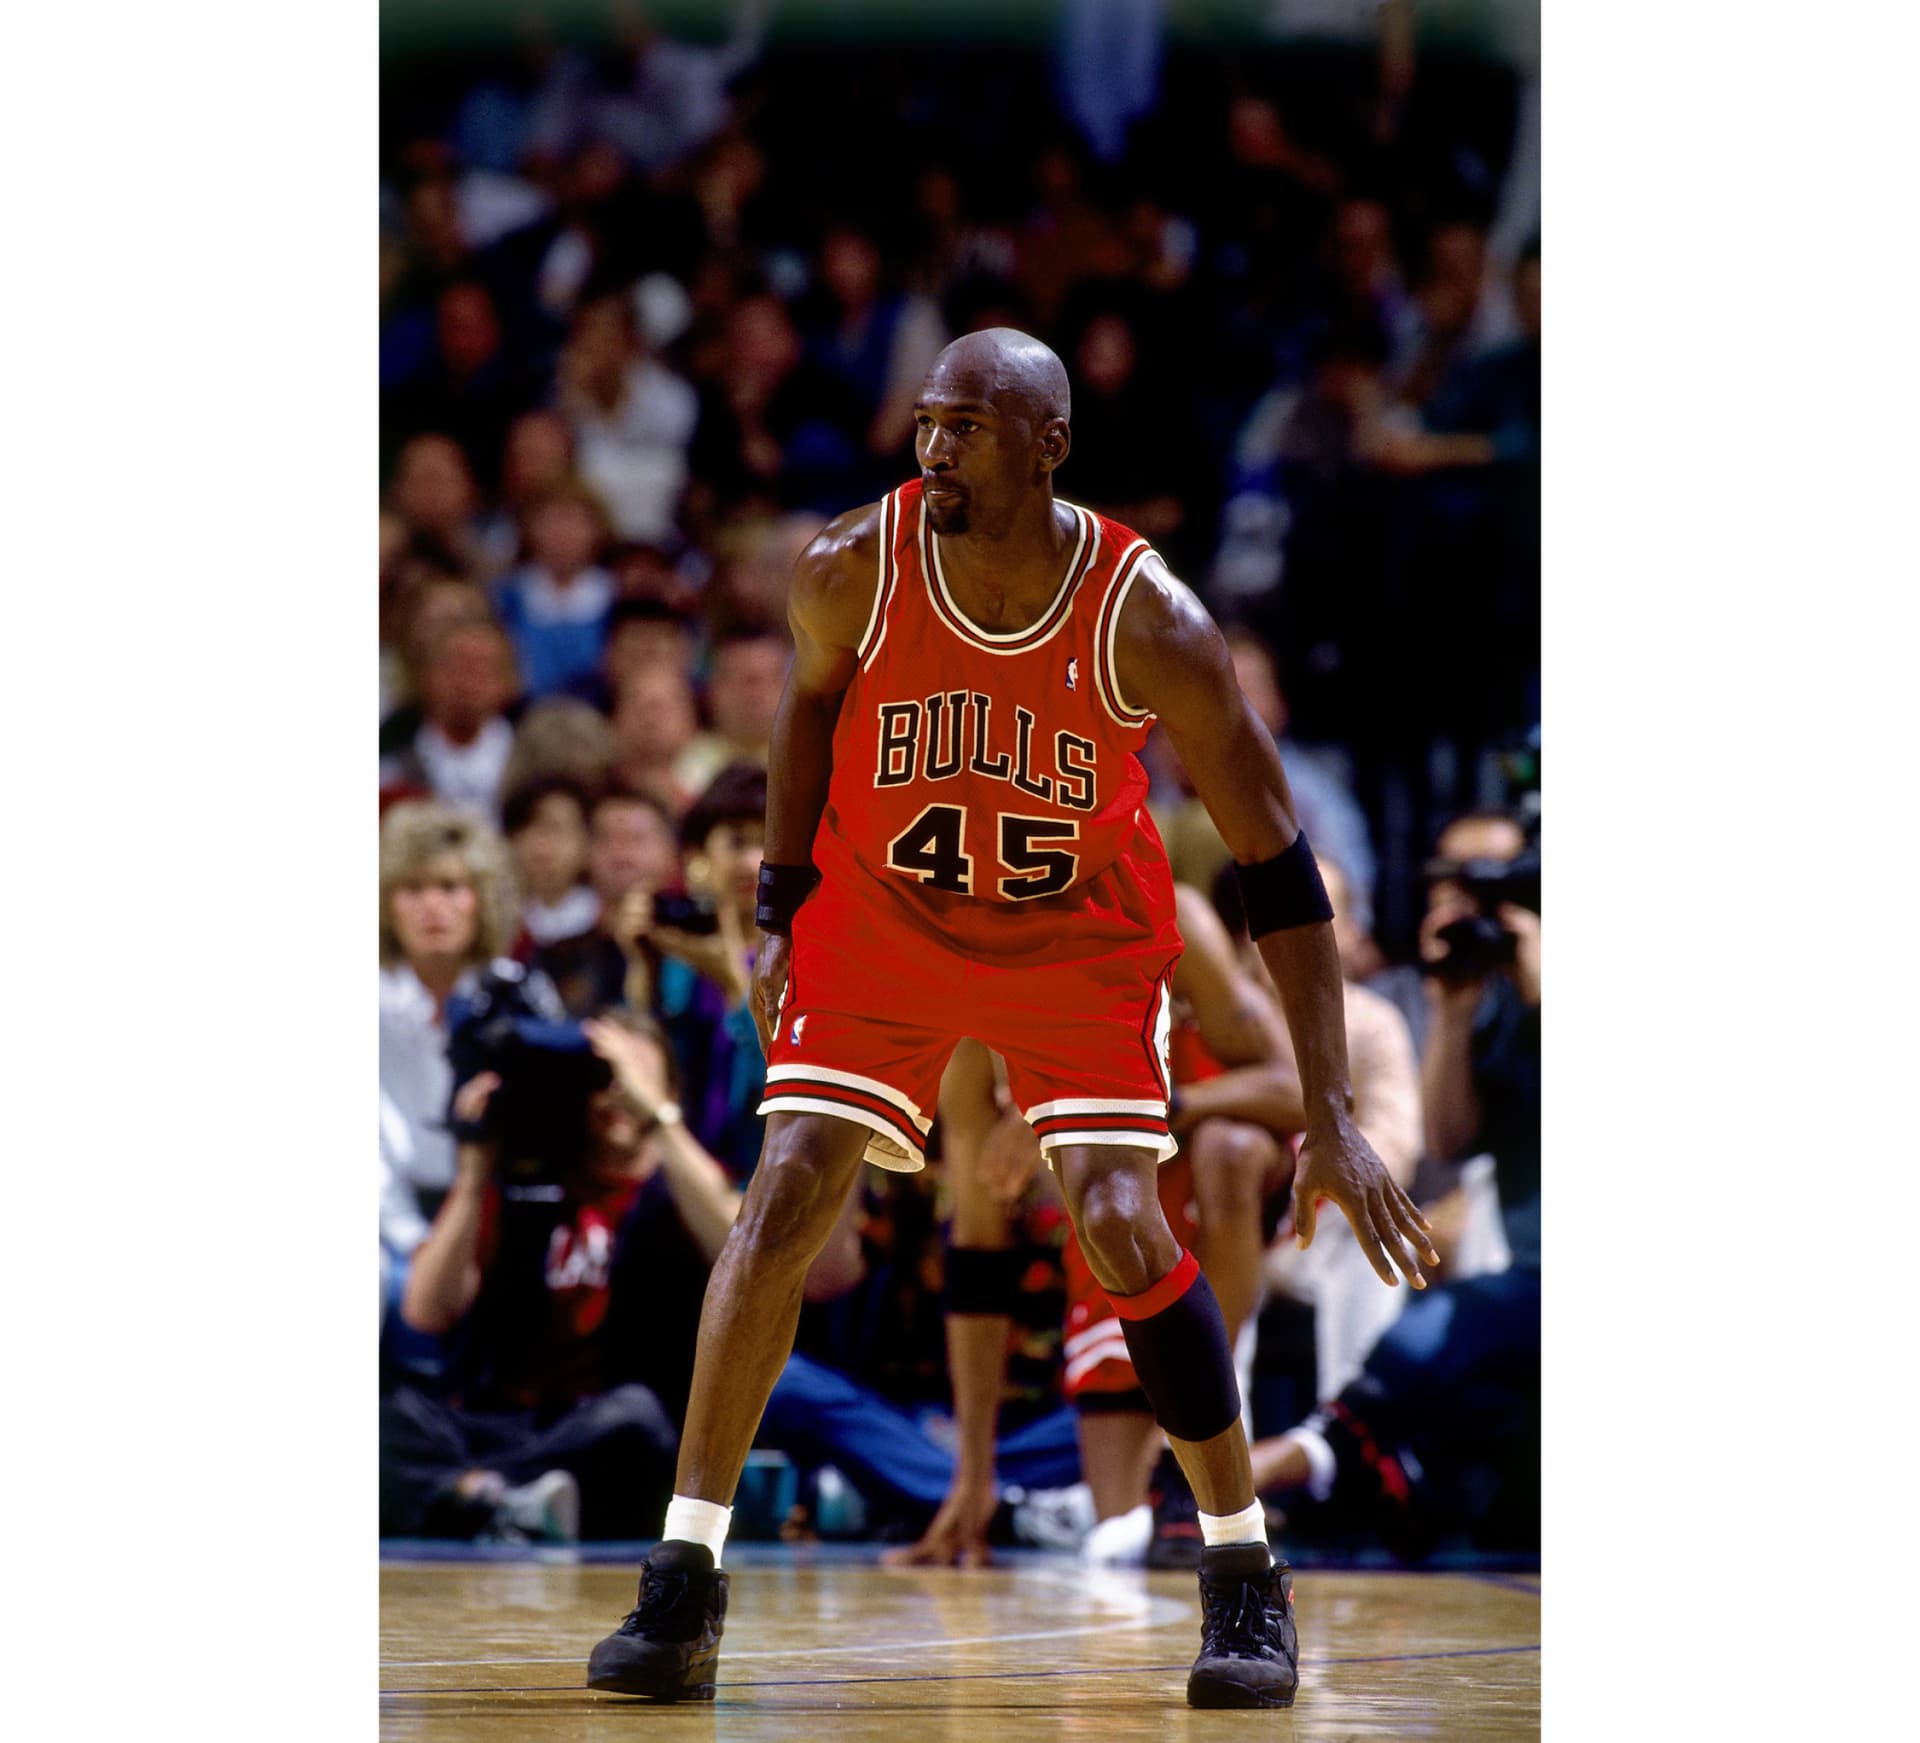 MJ wearing the Black/Infrared Air Jordan 6. During the 1991 NBA